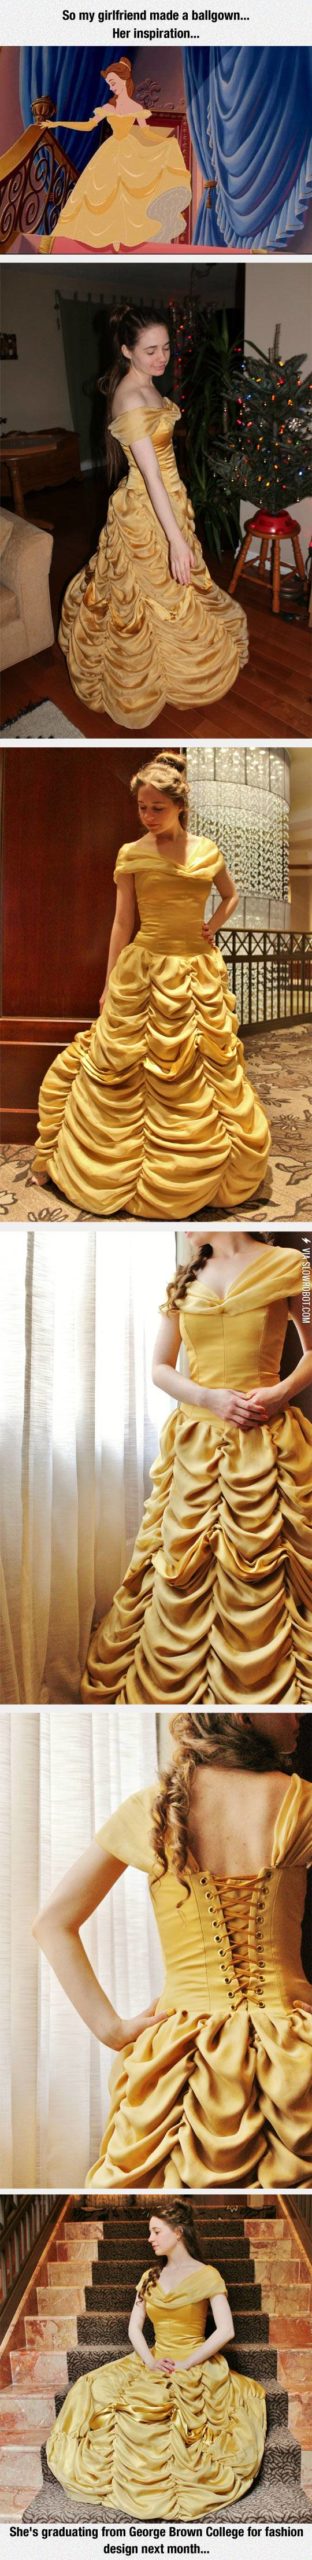 Amazing+Dress+Inspired+By+A+Disney+Princess